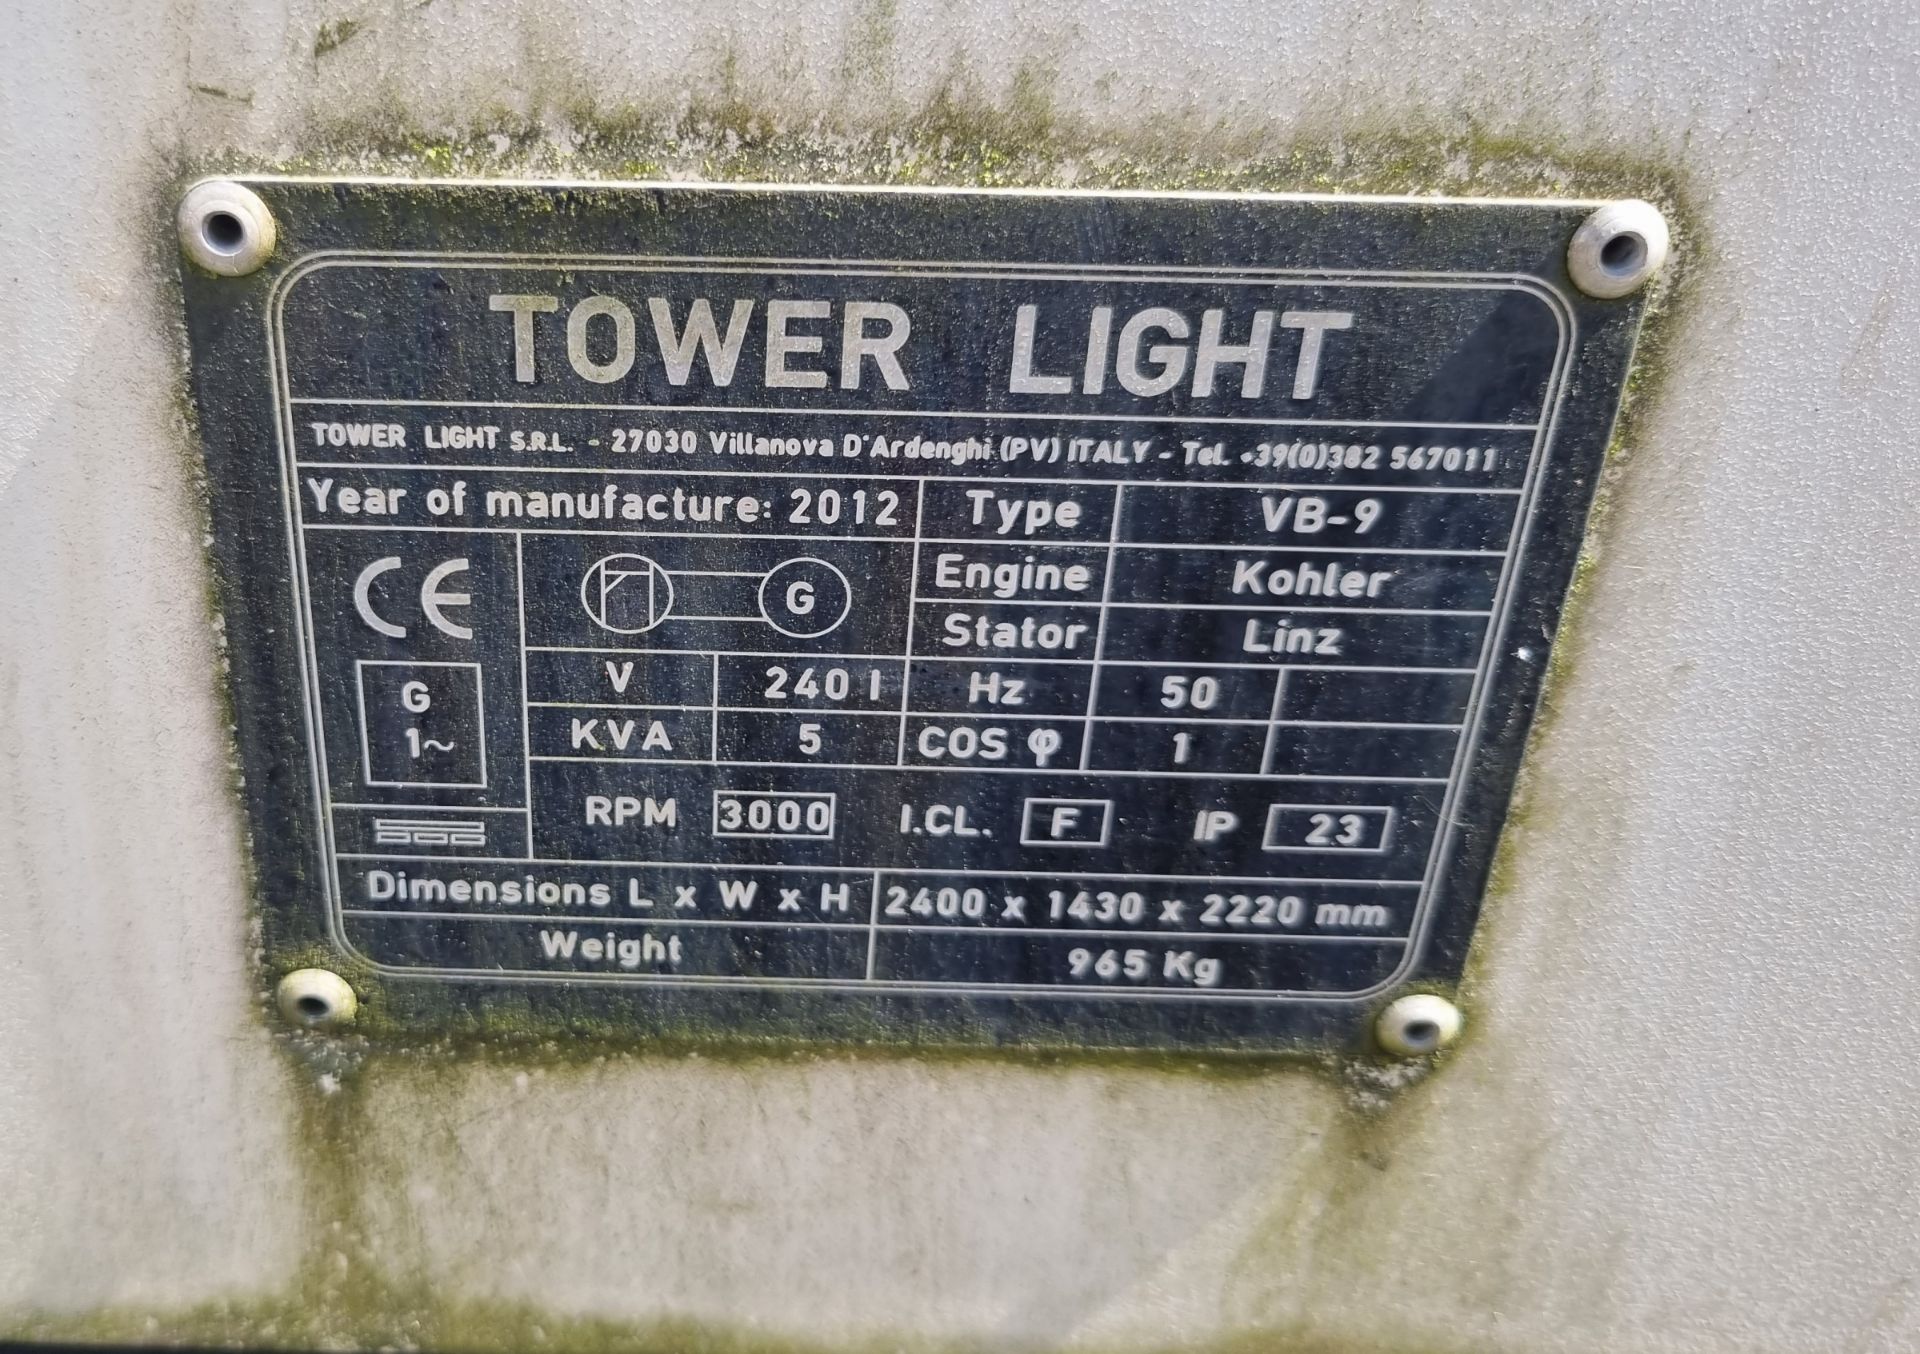 TowerLight VB-9 9m diesel engined, mobile lighting tower - Image 4 of 8